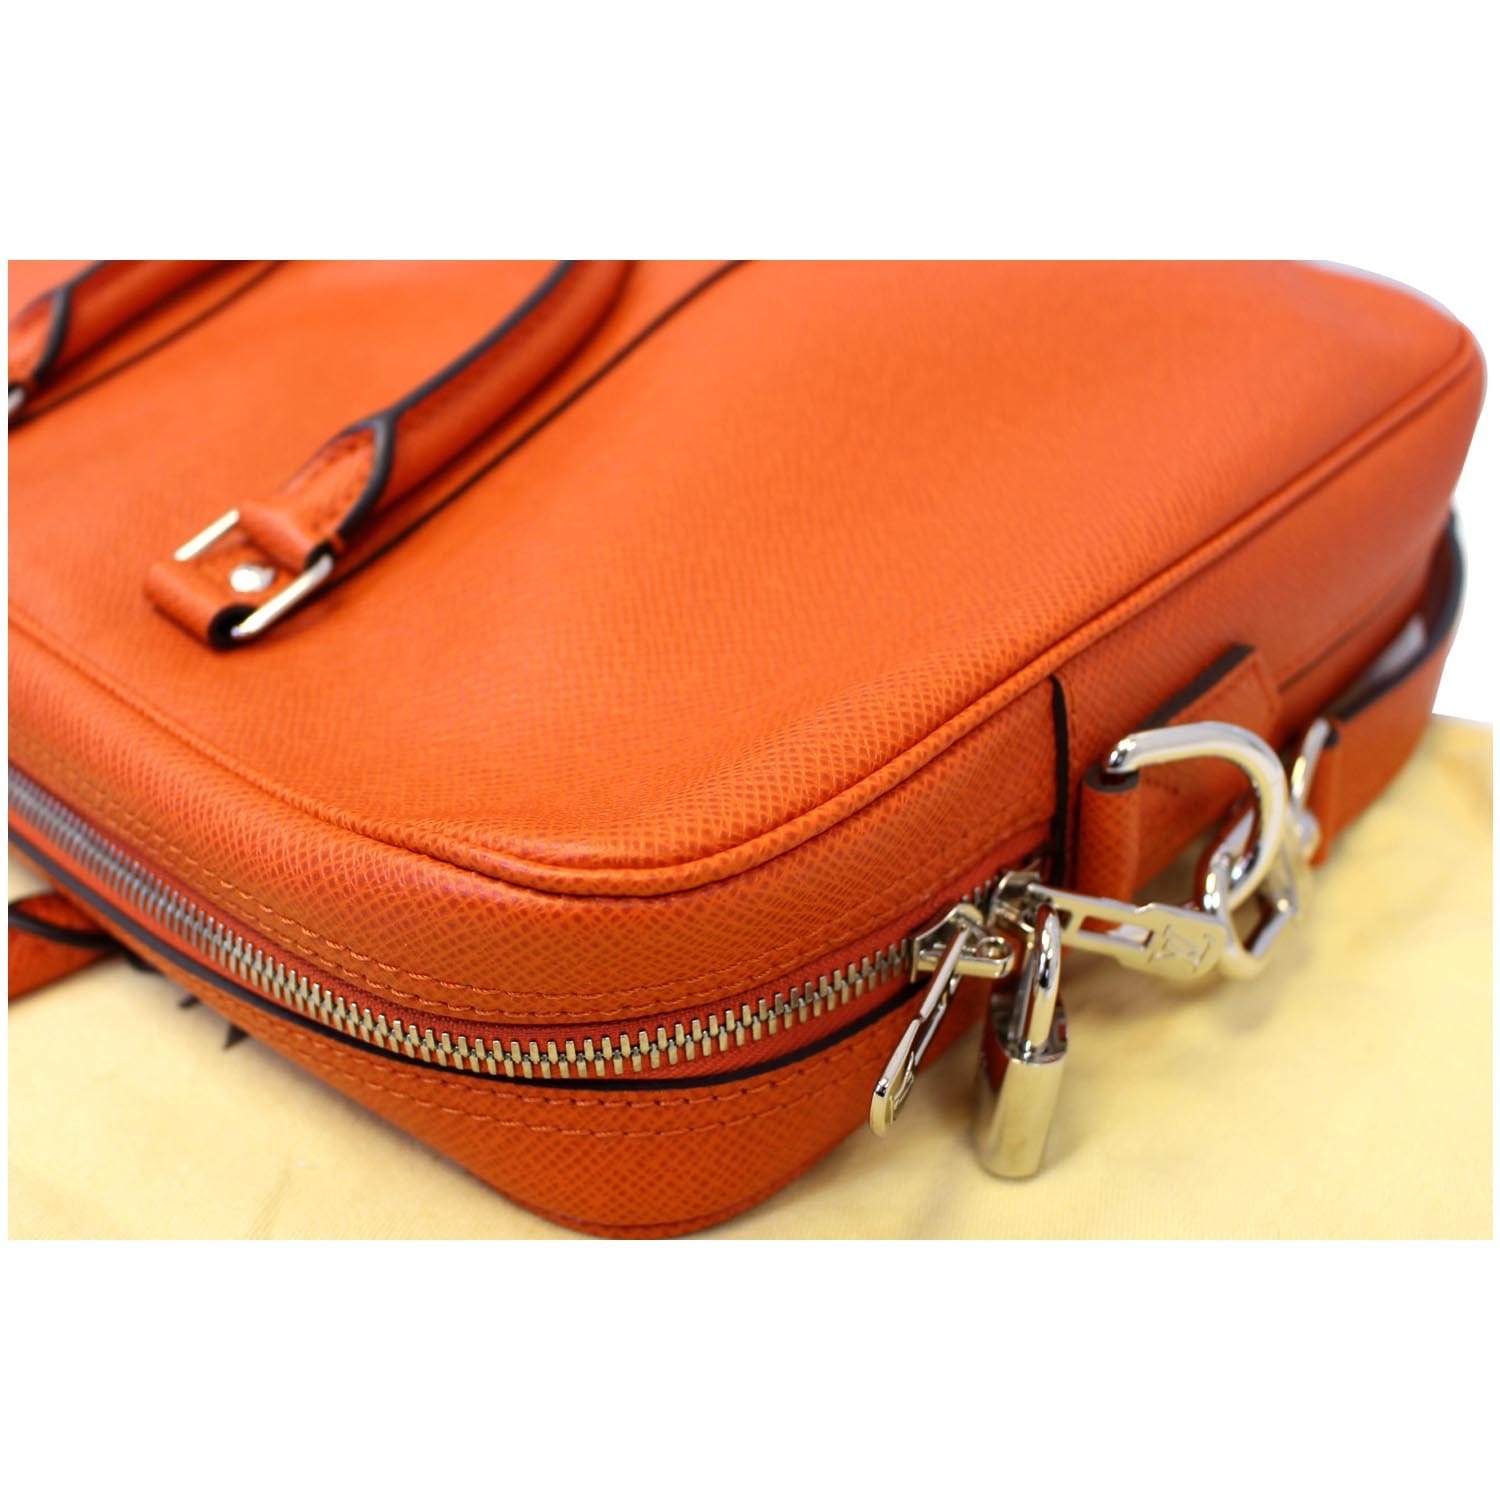 Louis Vuitton - Authenticated Passport Cover Small Bag - Leather Orange Plain for Men, Never Worn